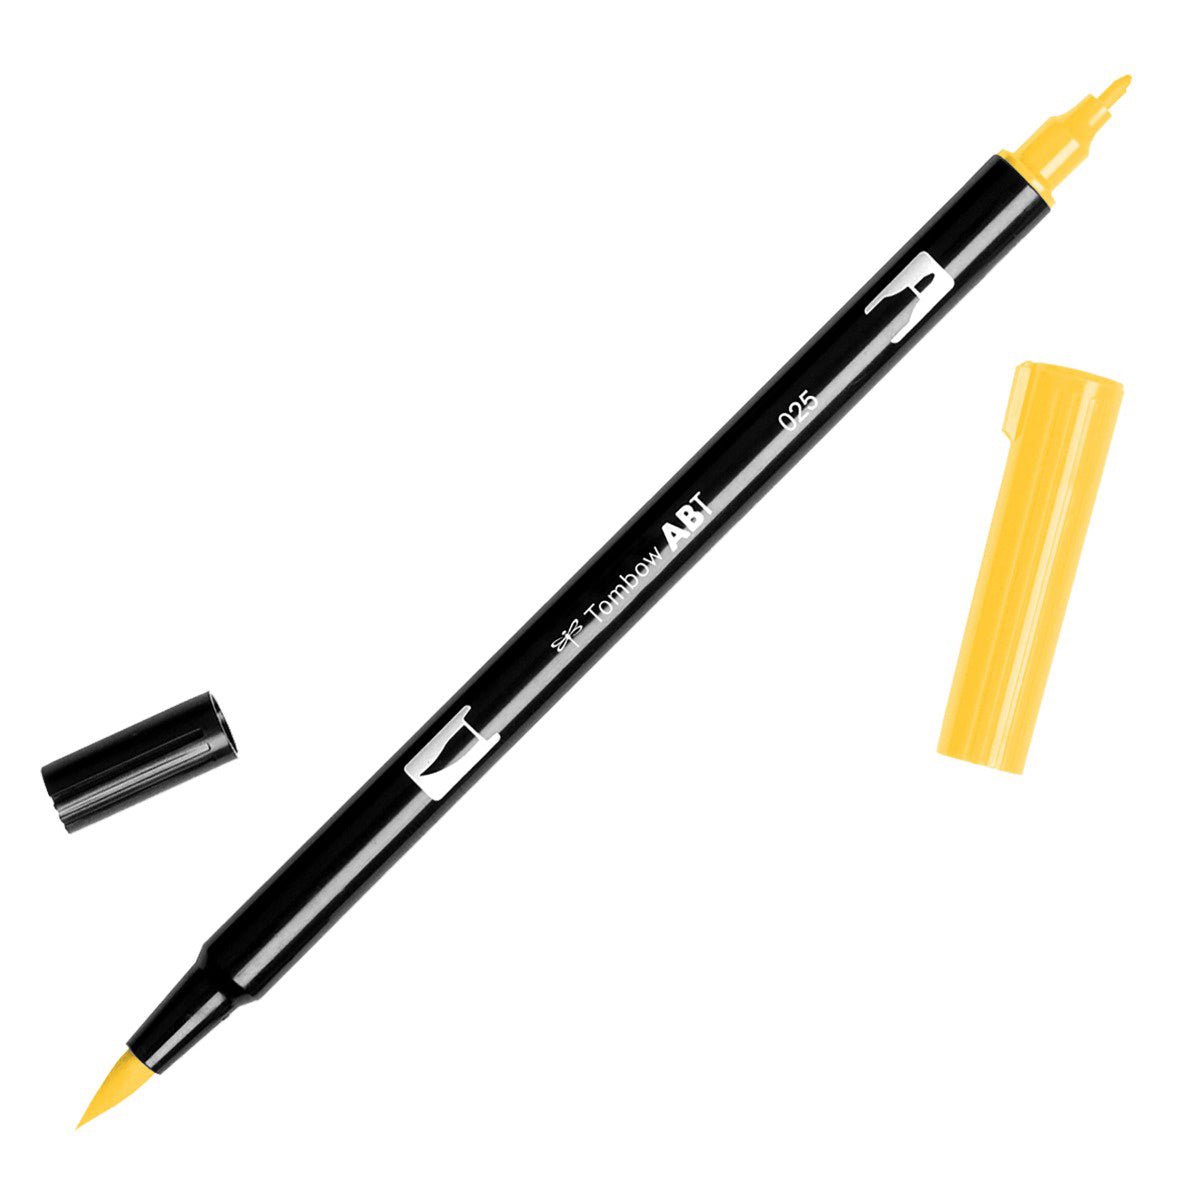 Tombow Dual Brush Pen - 025 - Light Orange